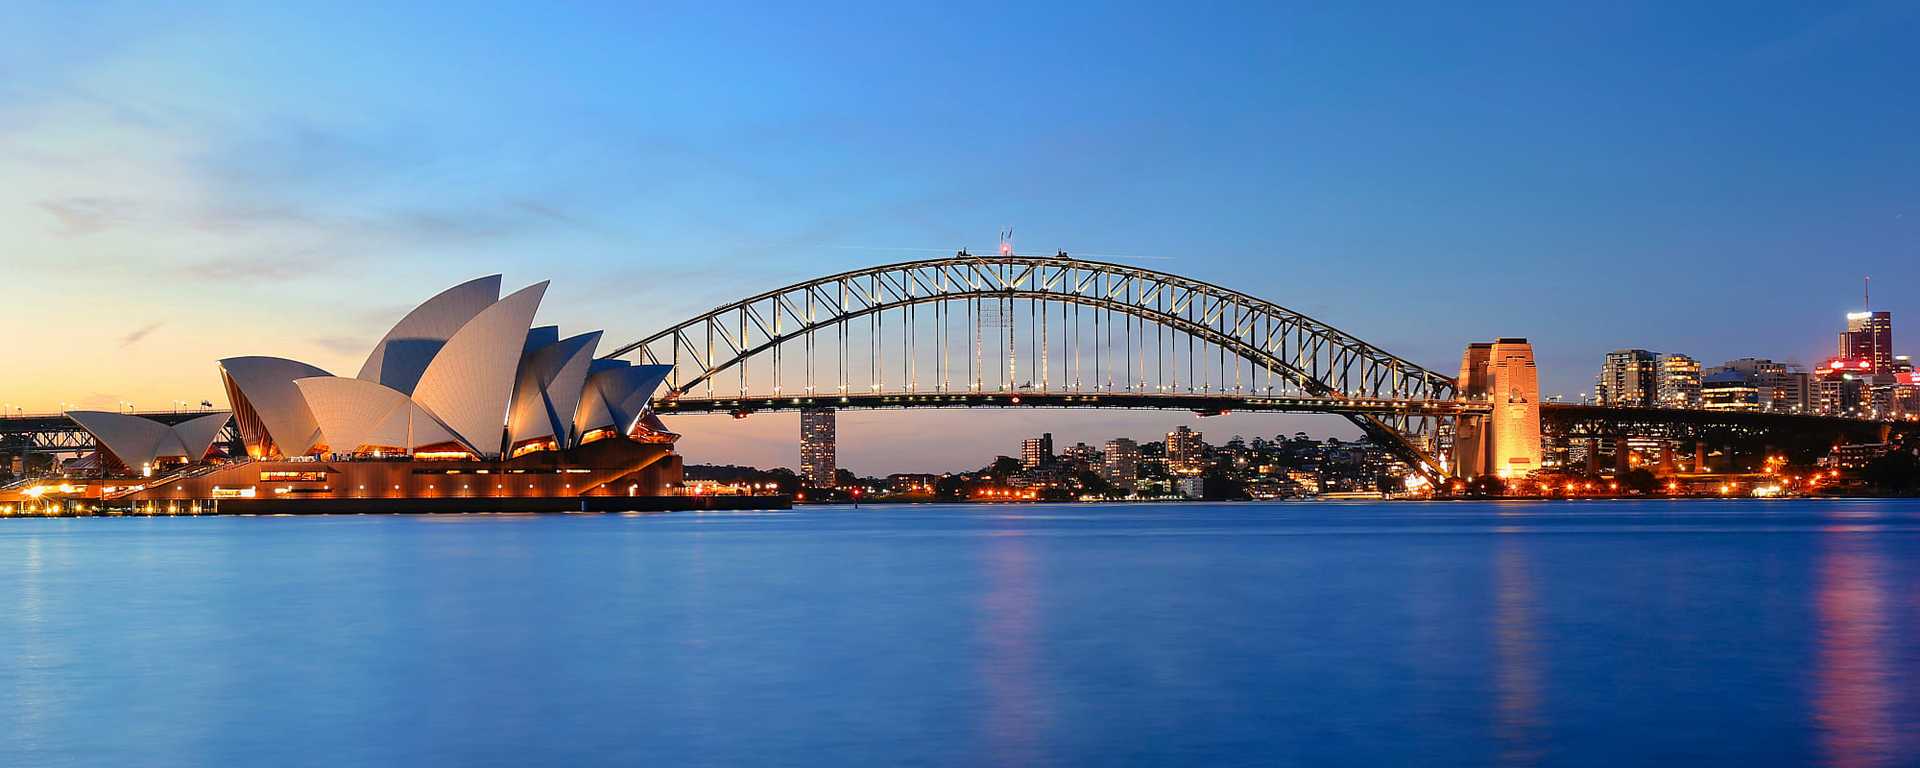 Sydney Harbor and Opera House in Australia